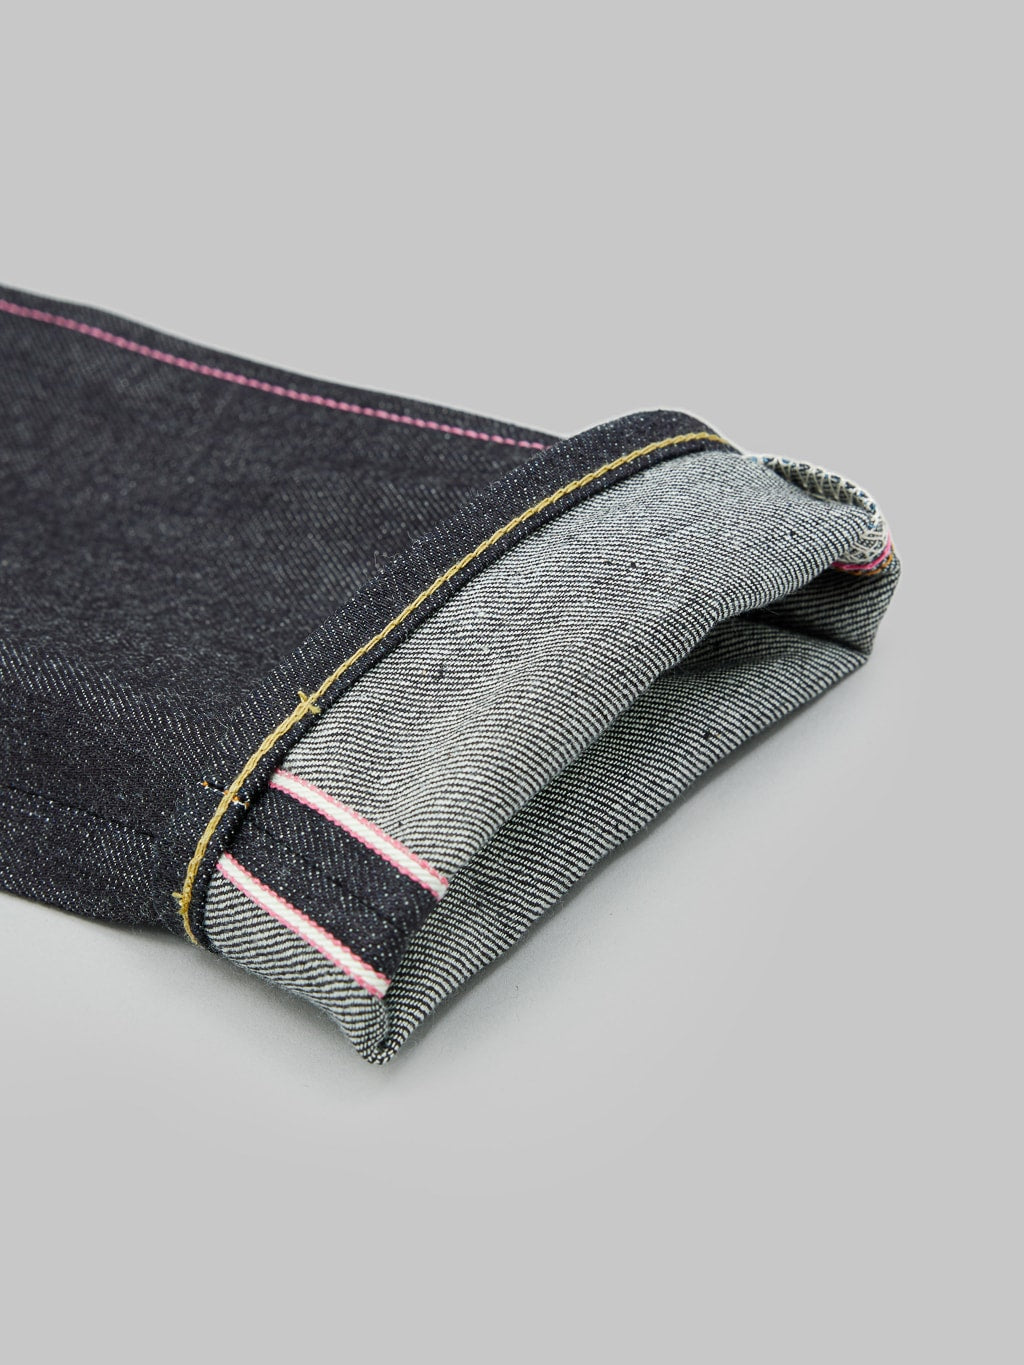 Momotaro 0405 12oz high Tapered Jeans  selvedge line closeup